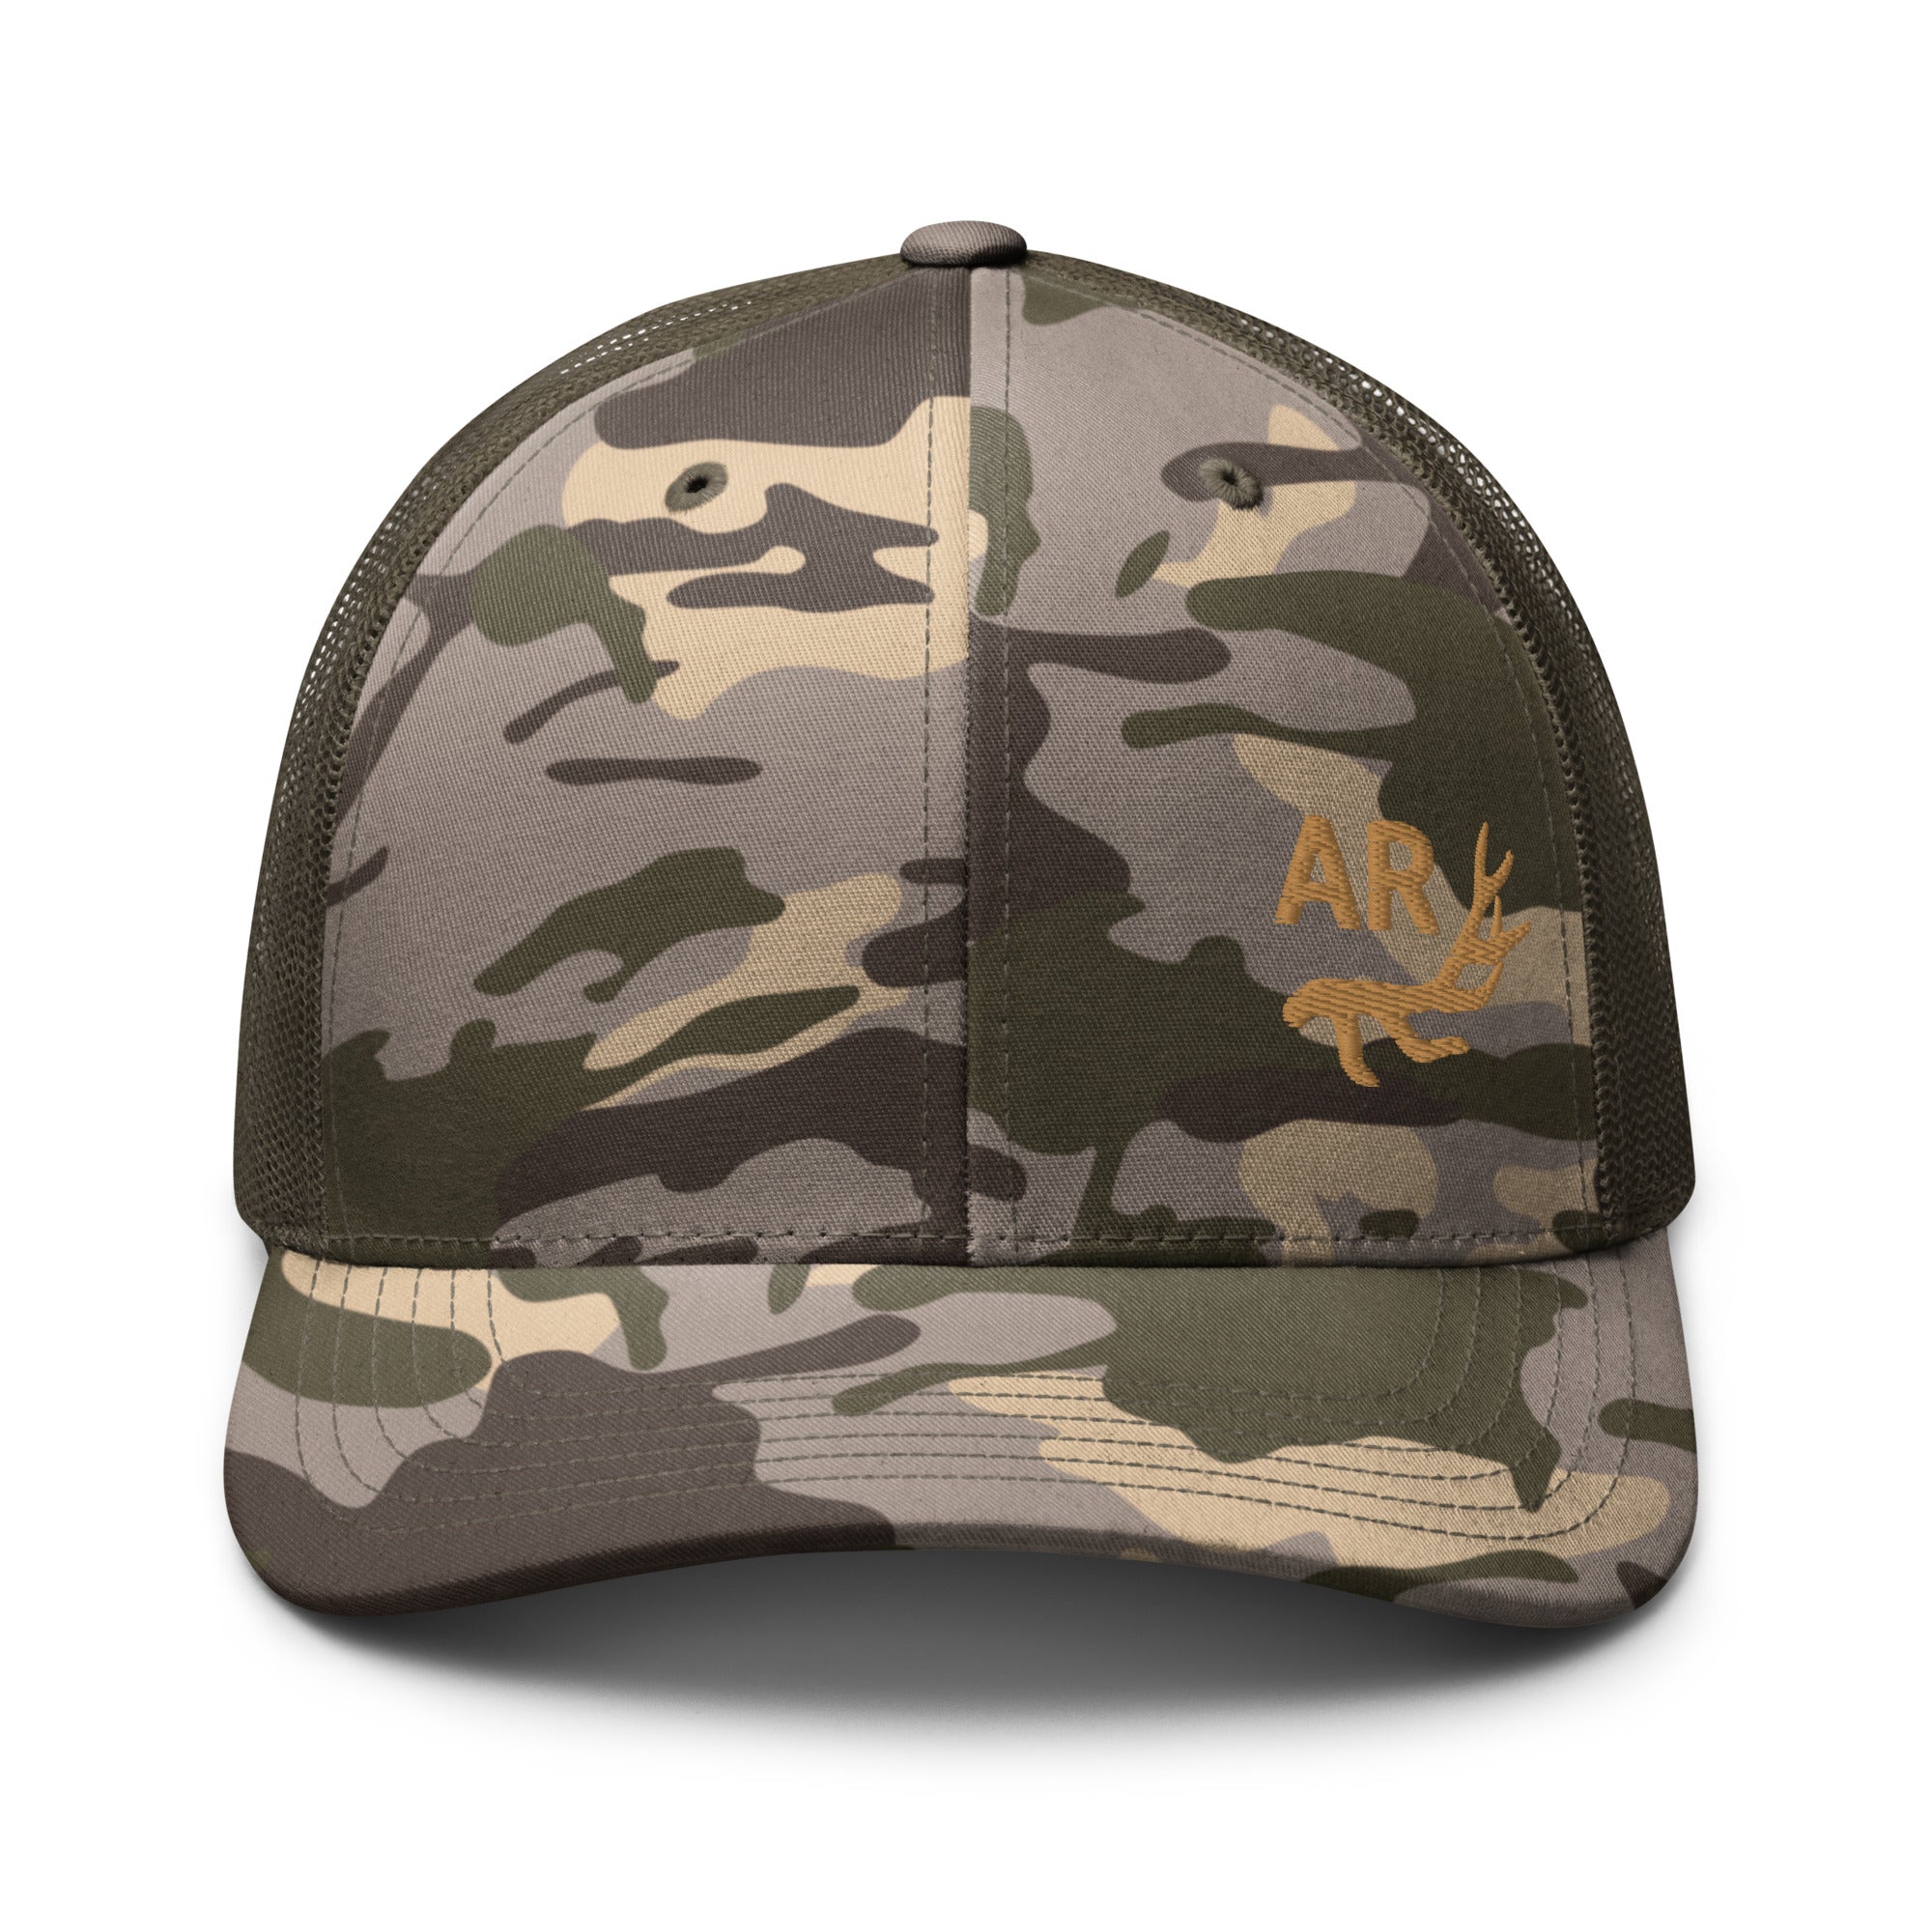 camouflage-trucker-hat-camo-olive-front-655e60ea64cc4.jpg